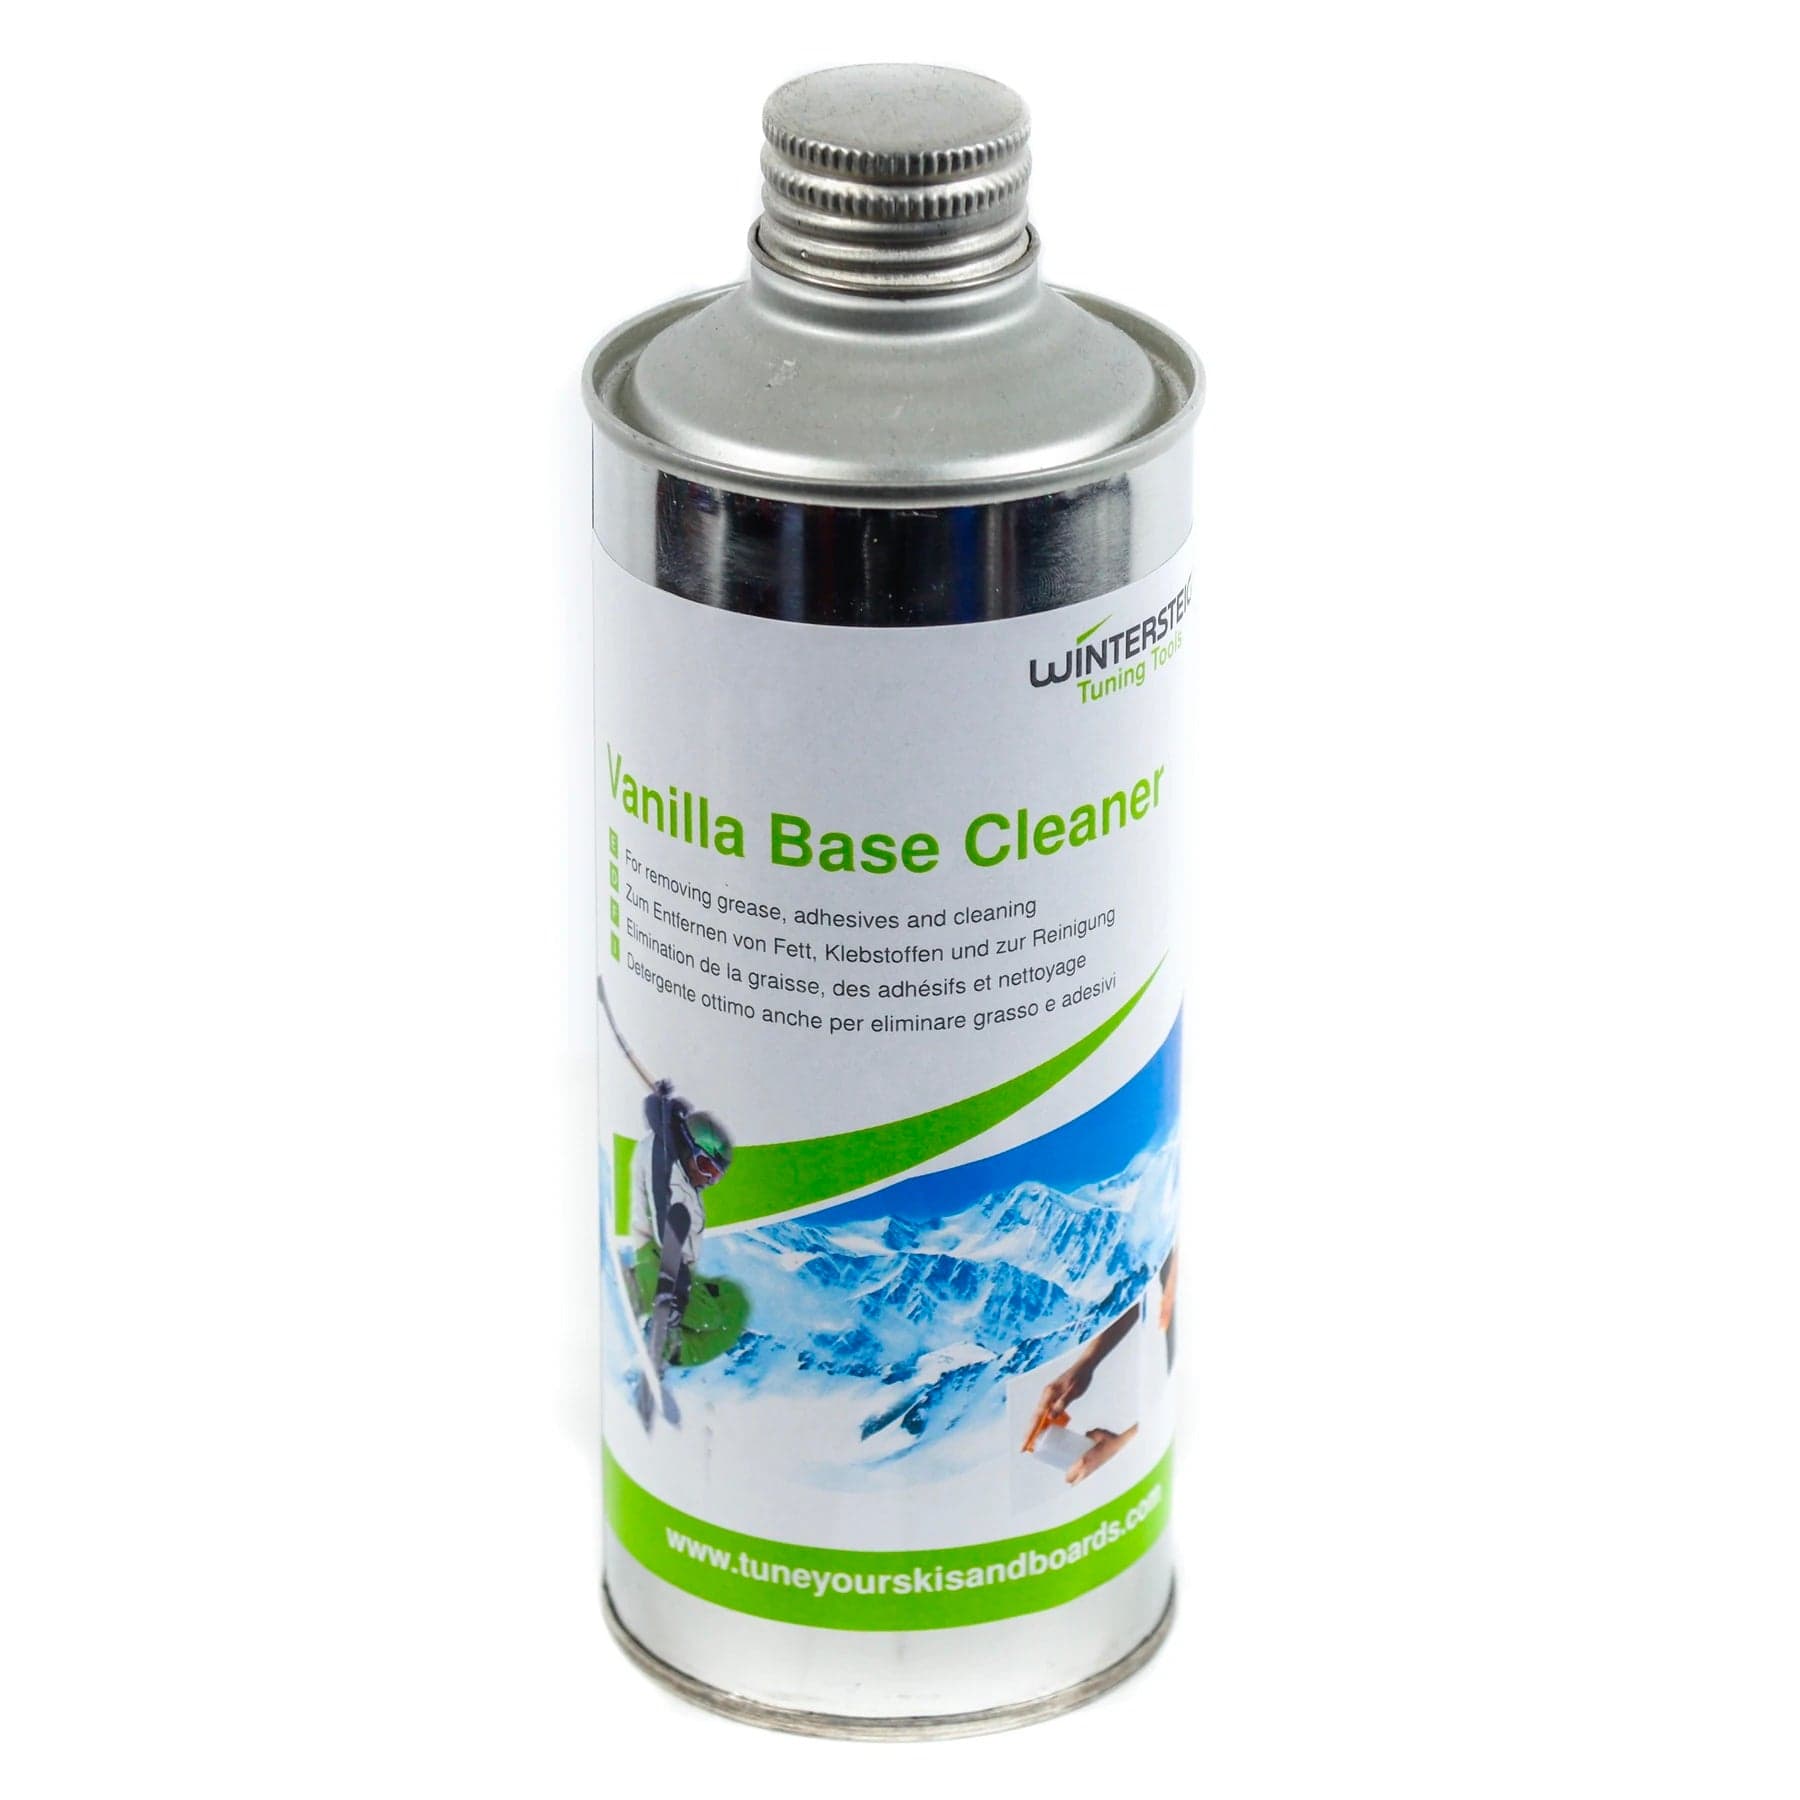 Wintersteiger Citrus Base Cleaner | Ski Wax Remover